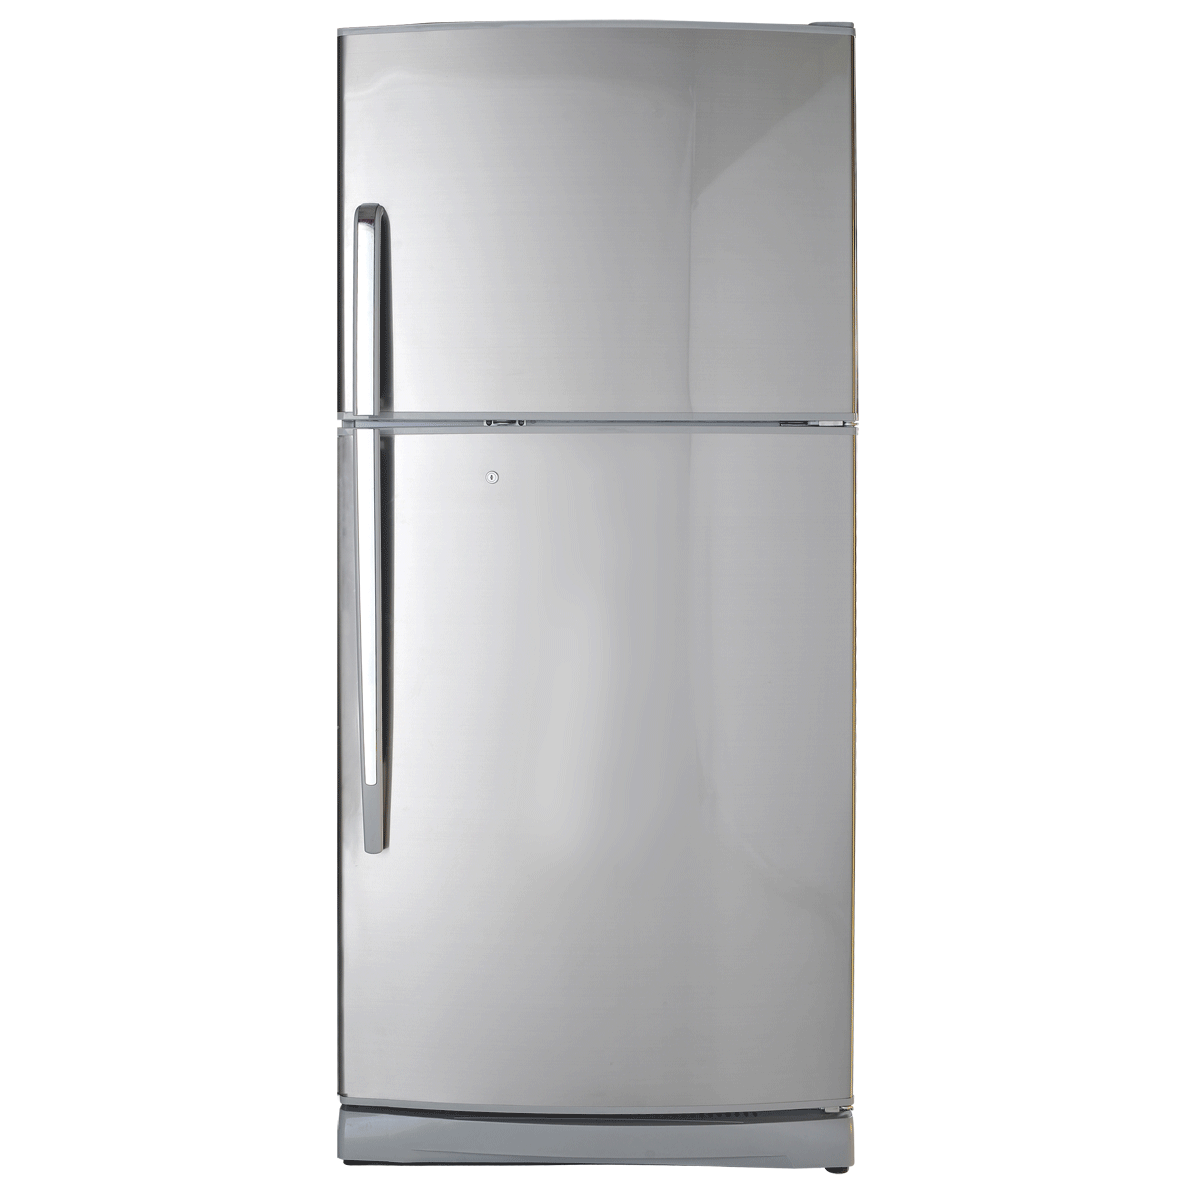 Domestic Freezer PNG Pic